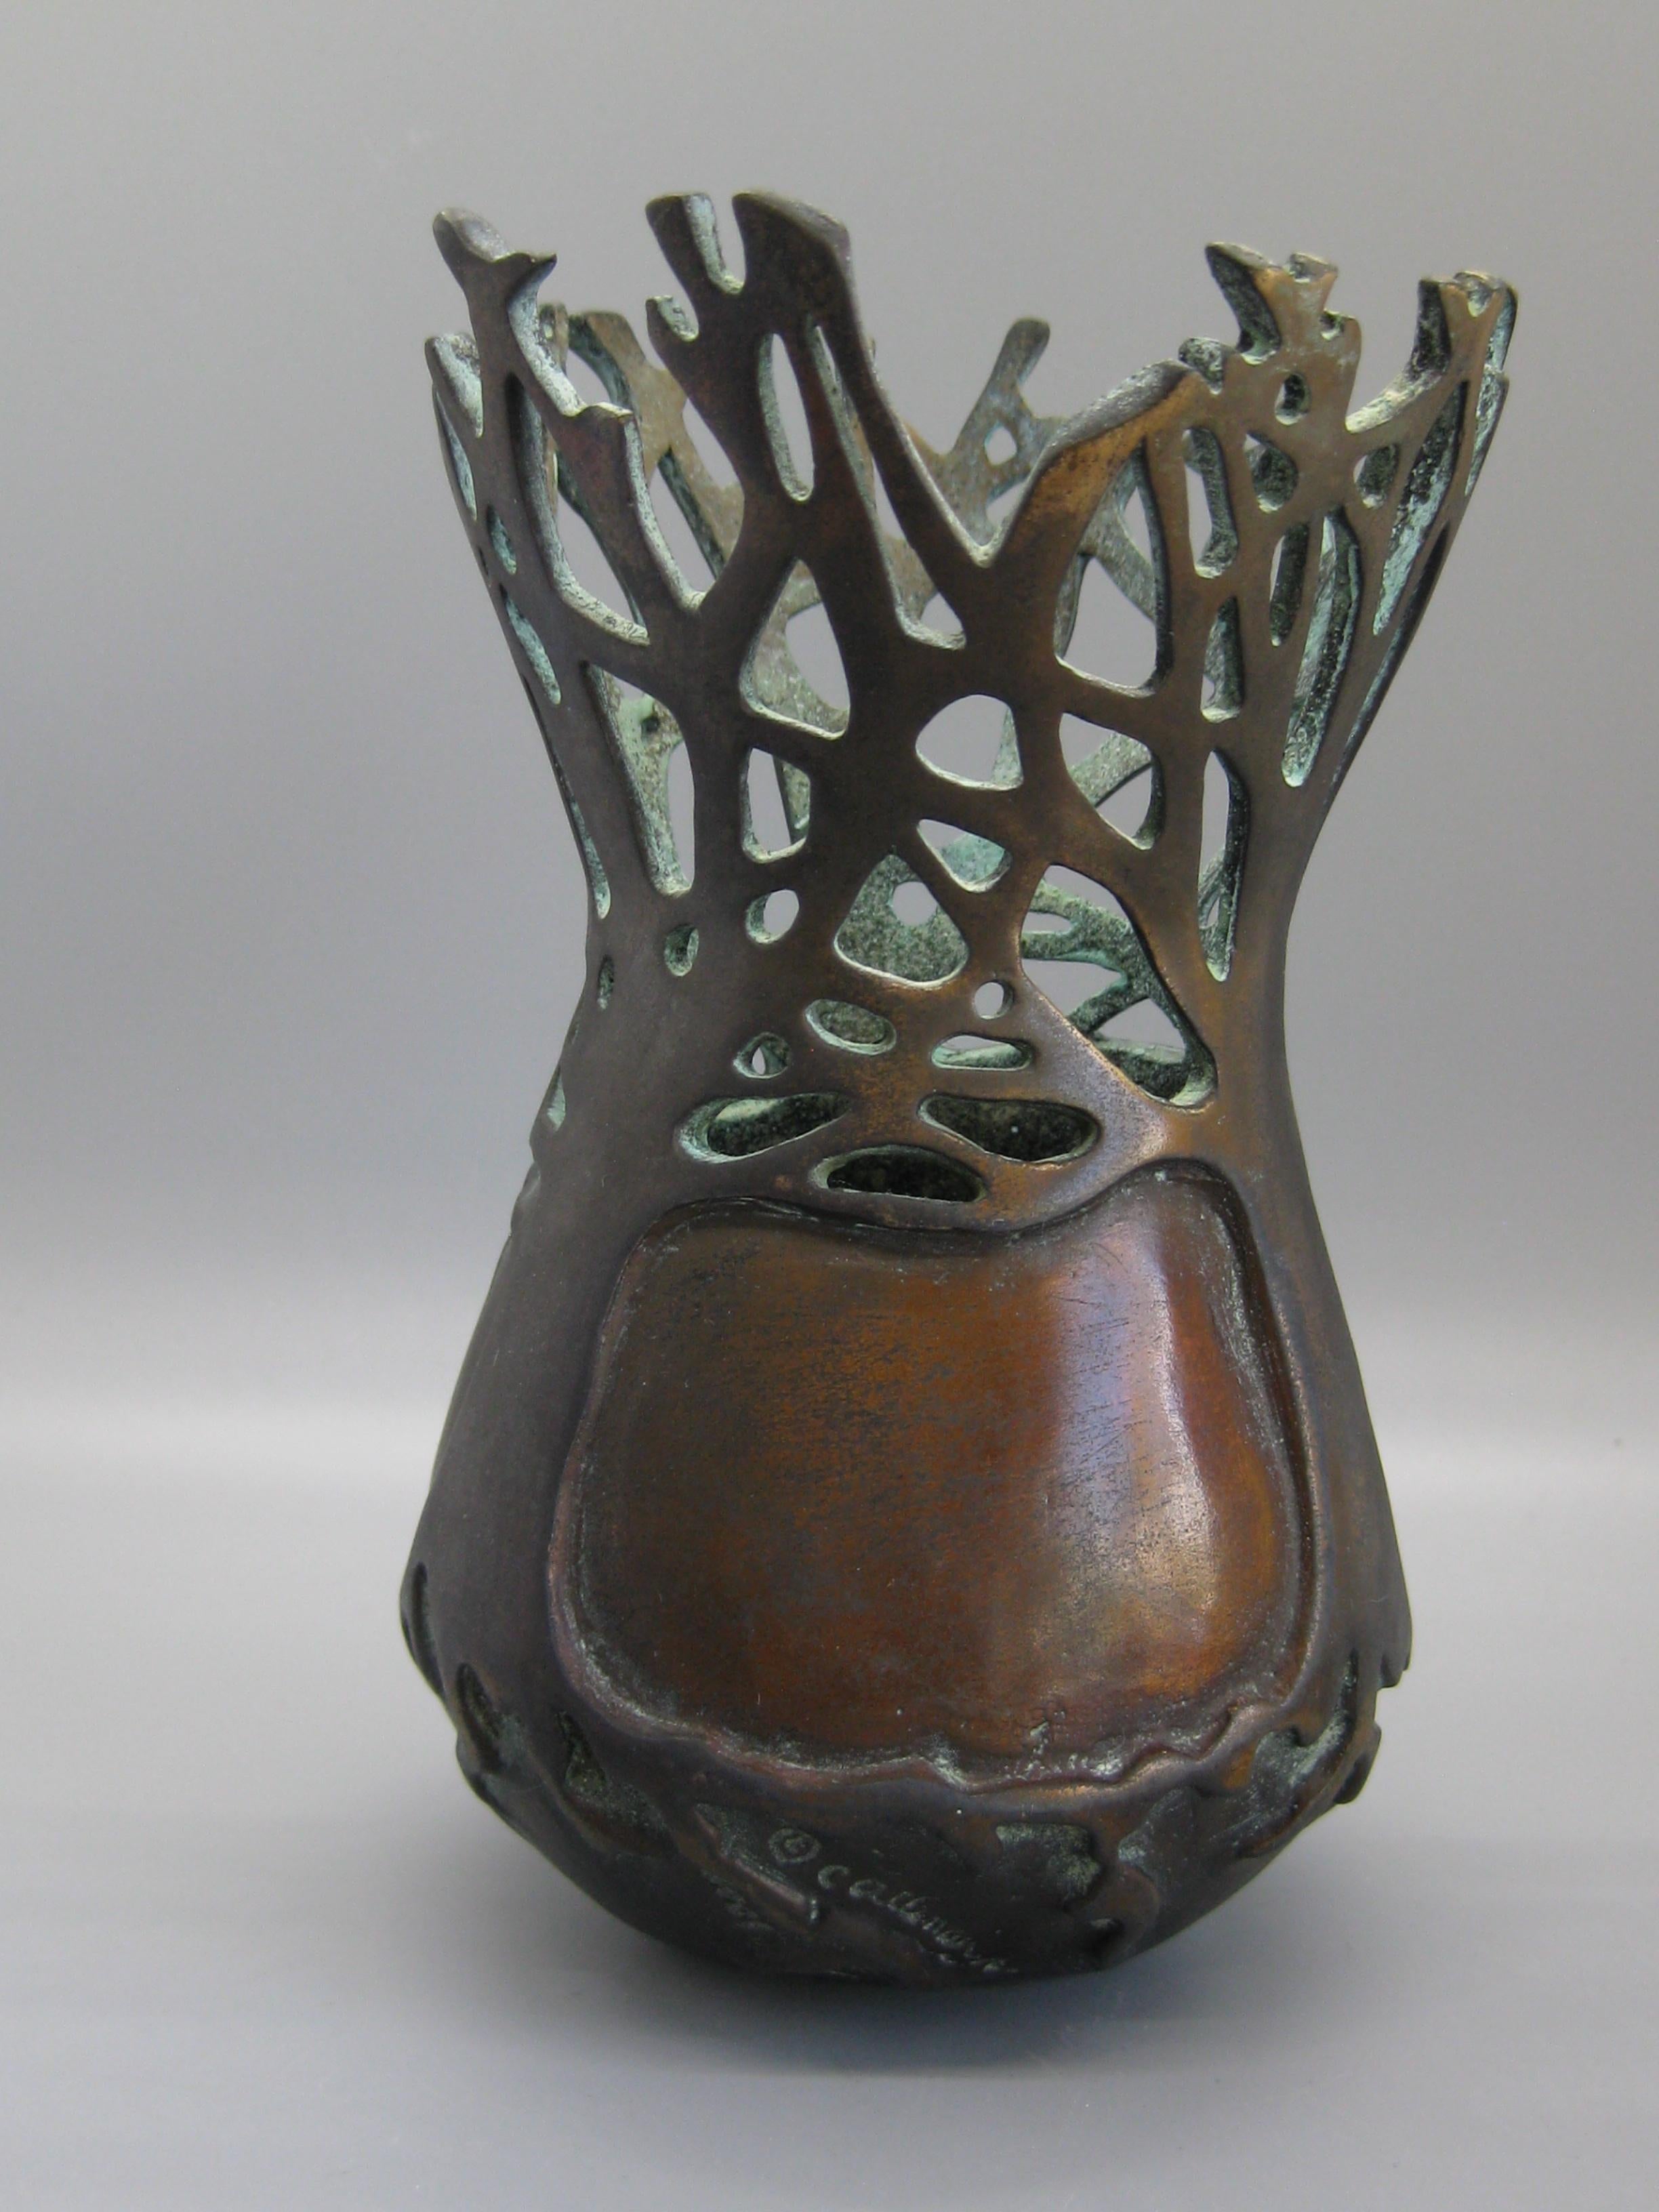 2001 Carol Alleman Organic Midcentury Bronze Vase Vessel Sculpture Limited 75 For Sale 1